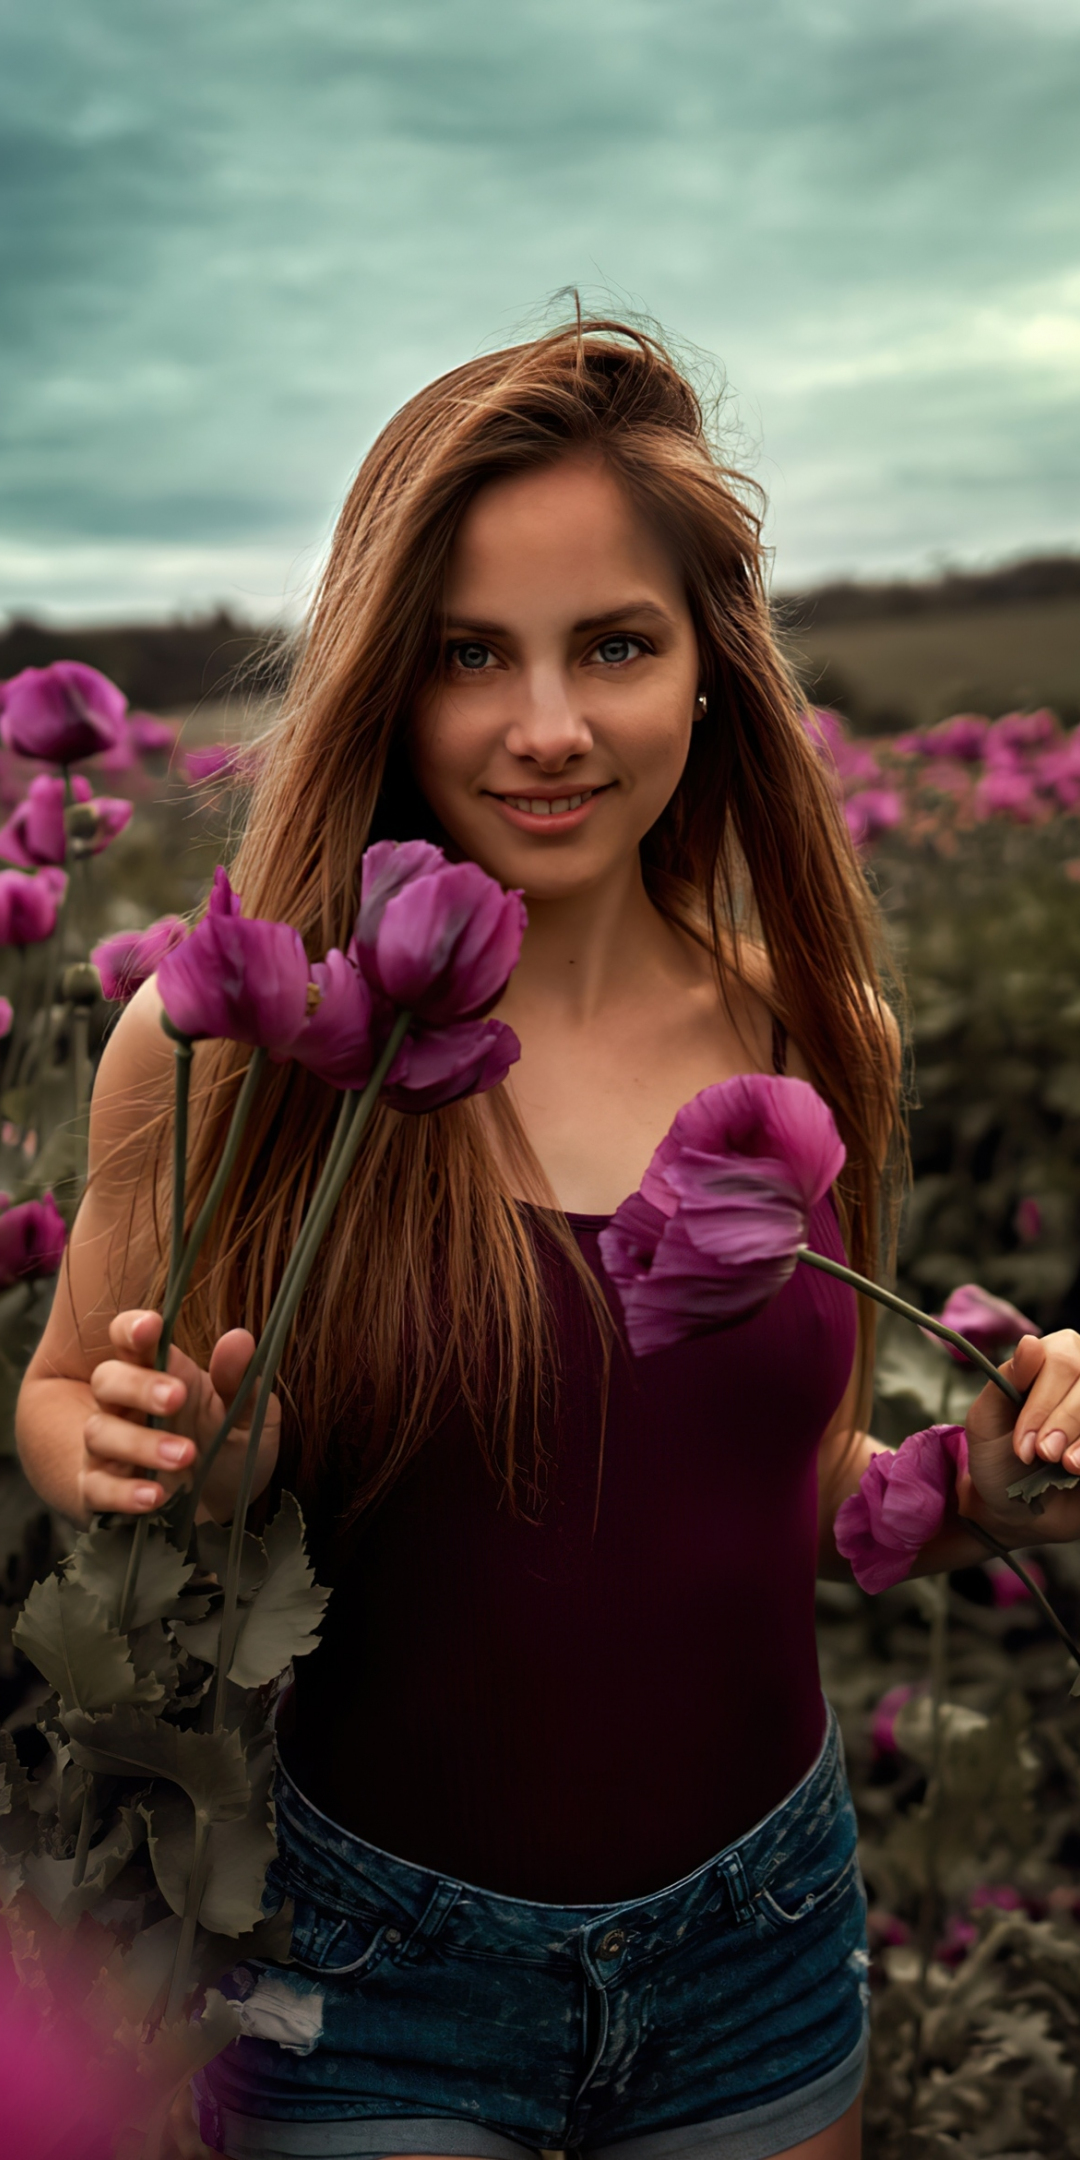 Beautiful woman, outdoor at farm field, model, 1080x2160 wallpaper